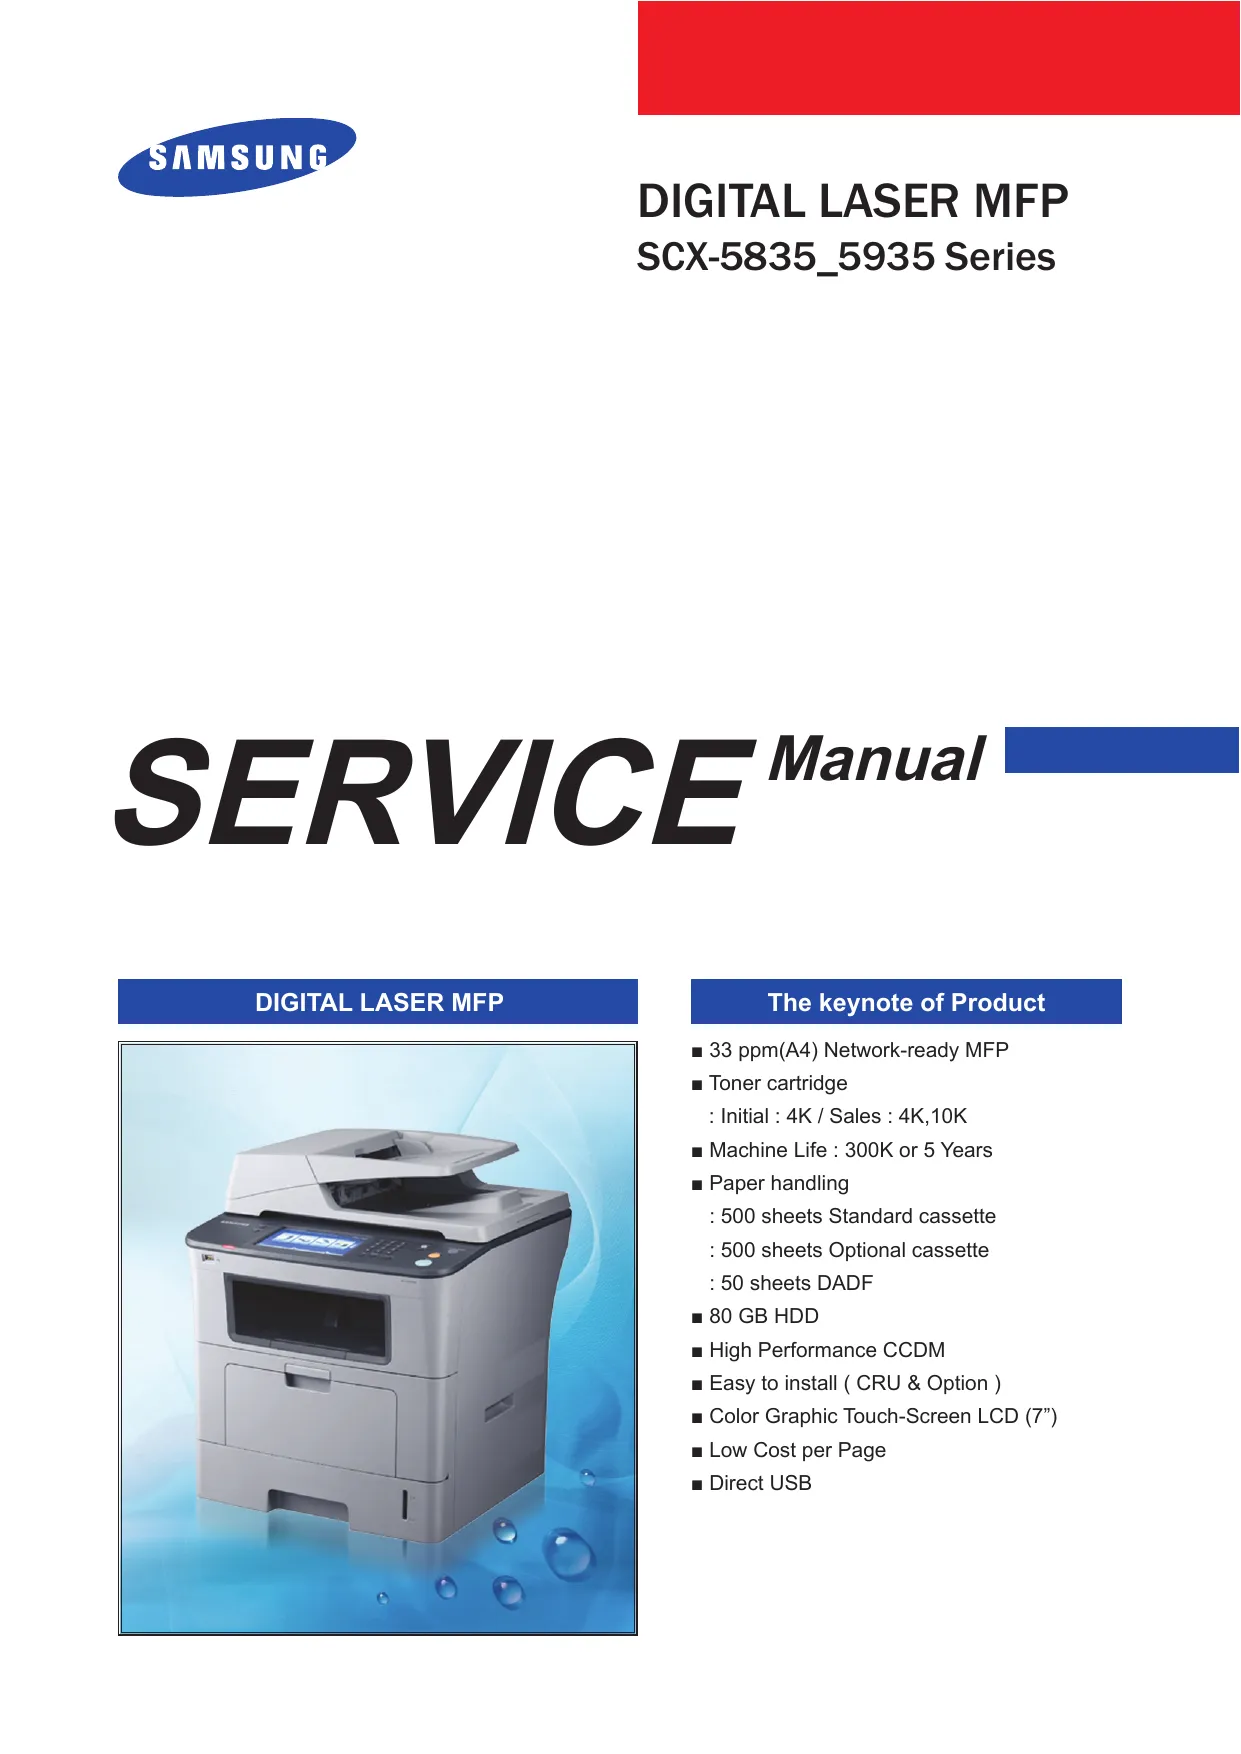 Samsung SCX-5835, 5835FN, 5935, 5935FN multifunction printers (MFP) service guide